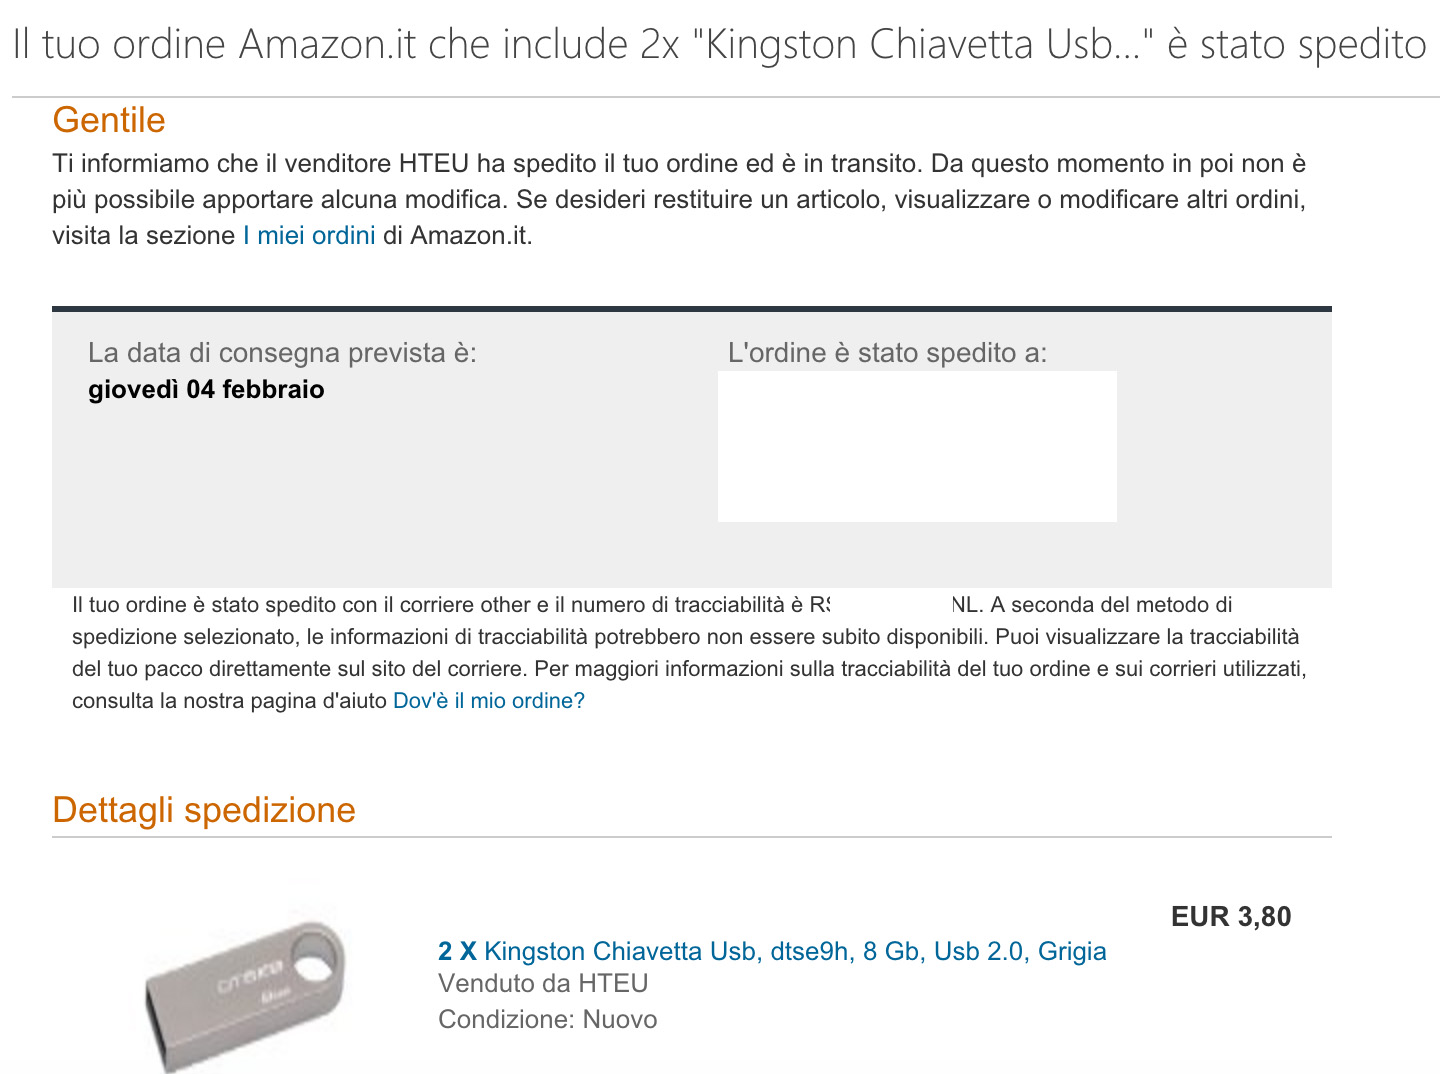 Kingston Chiavetta Usb, dtse9h, 8 Gb, Usb 2.0, Grigia a 1.90€ su Amazon